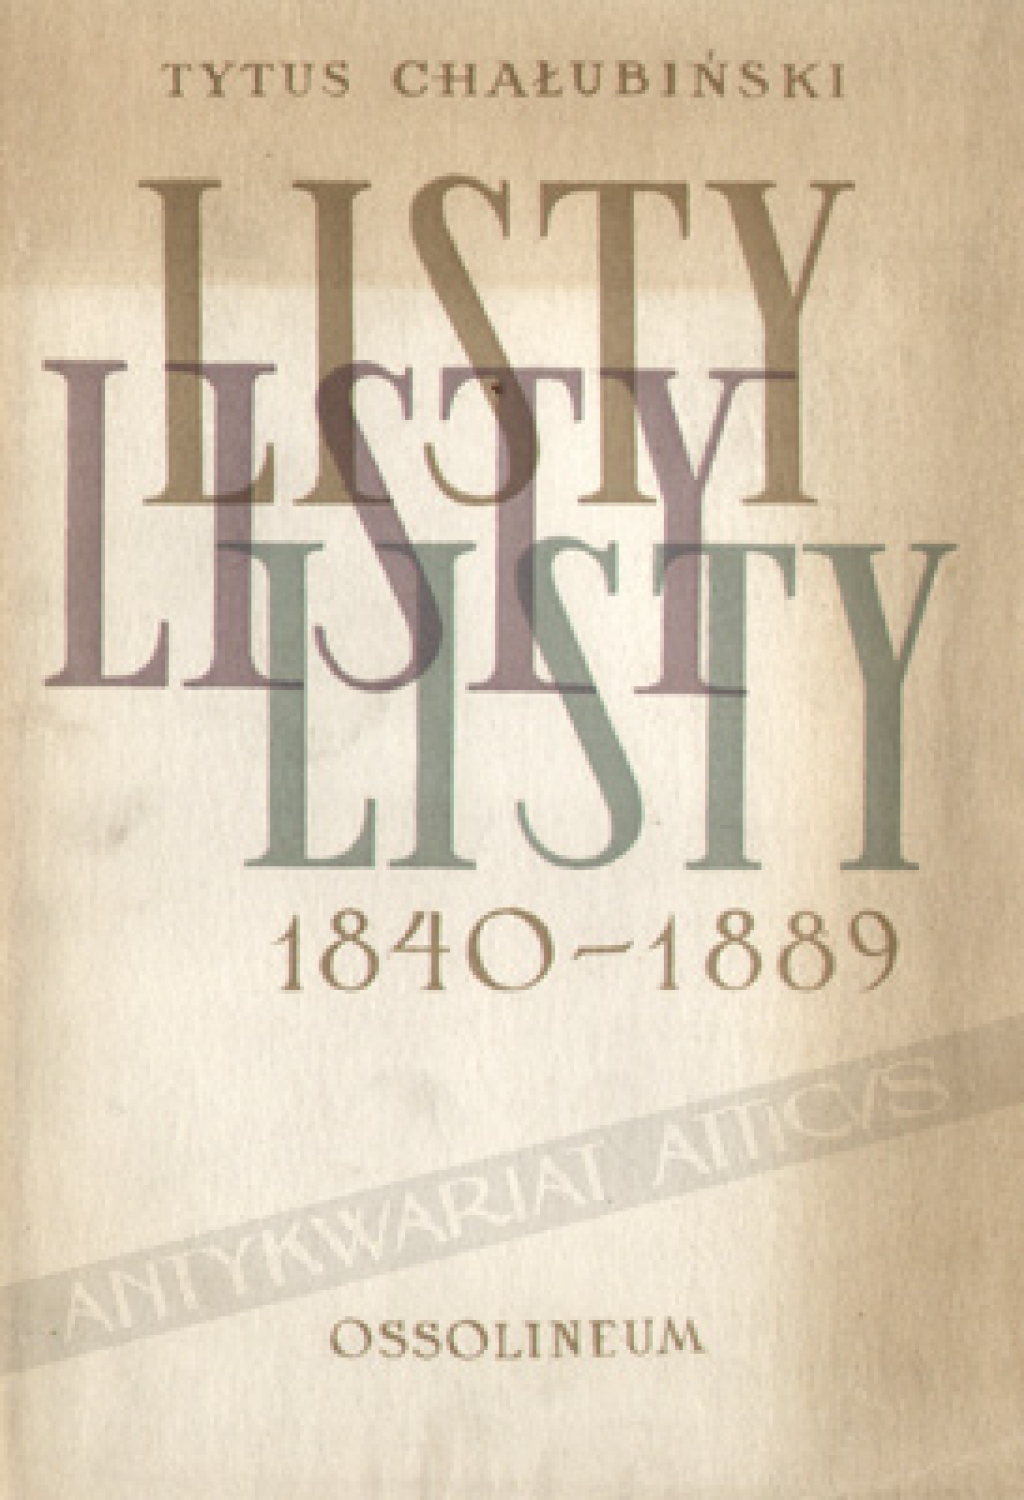 Listy 1840-1889